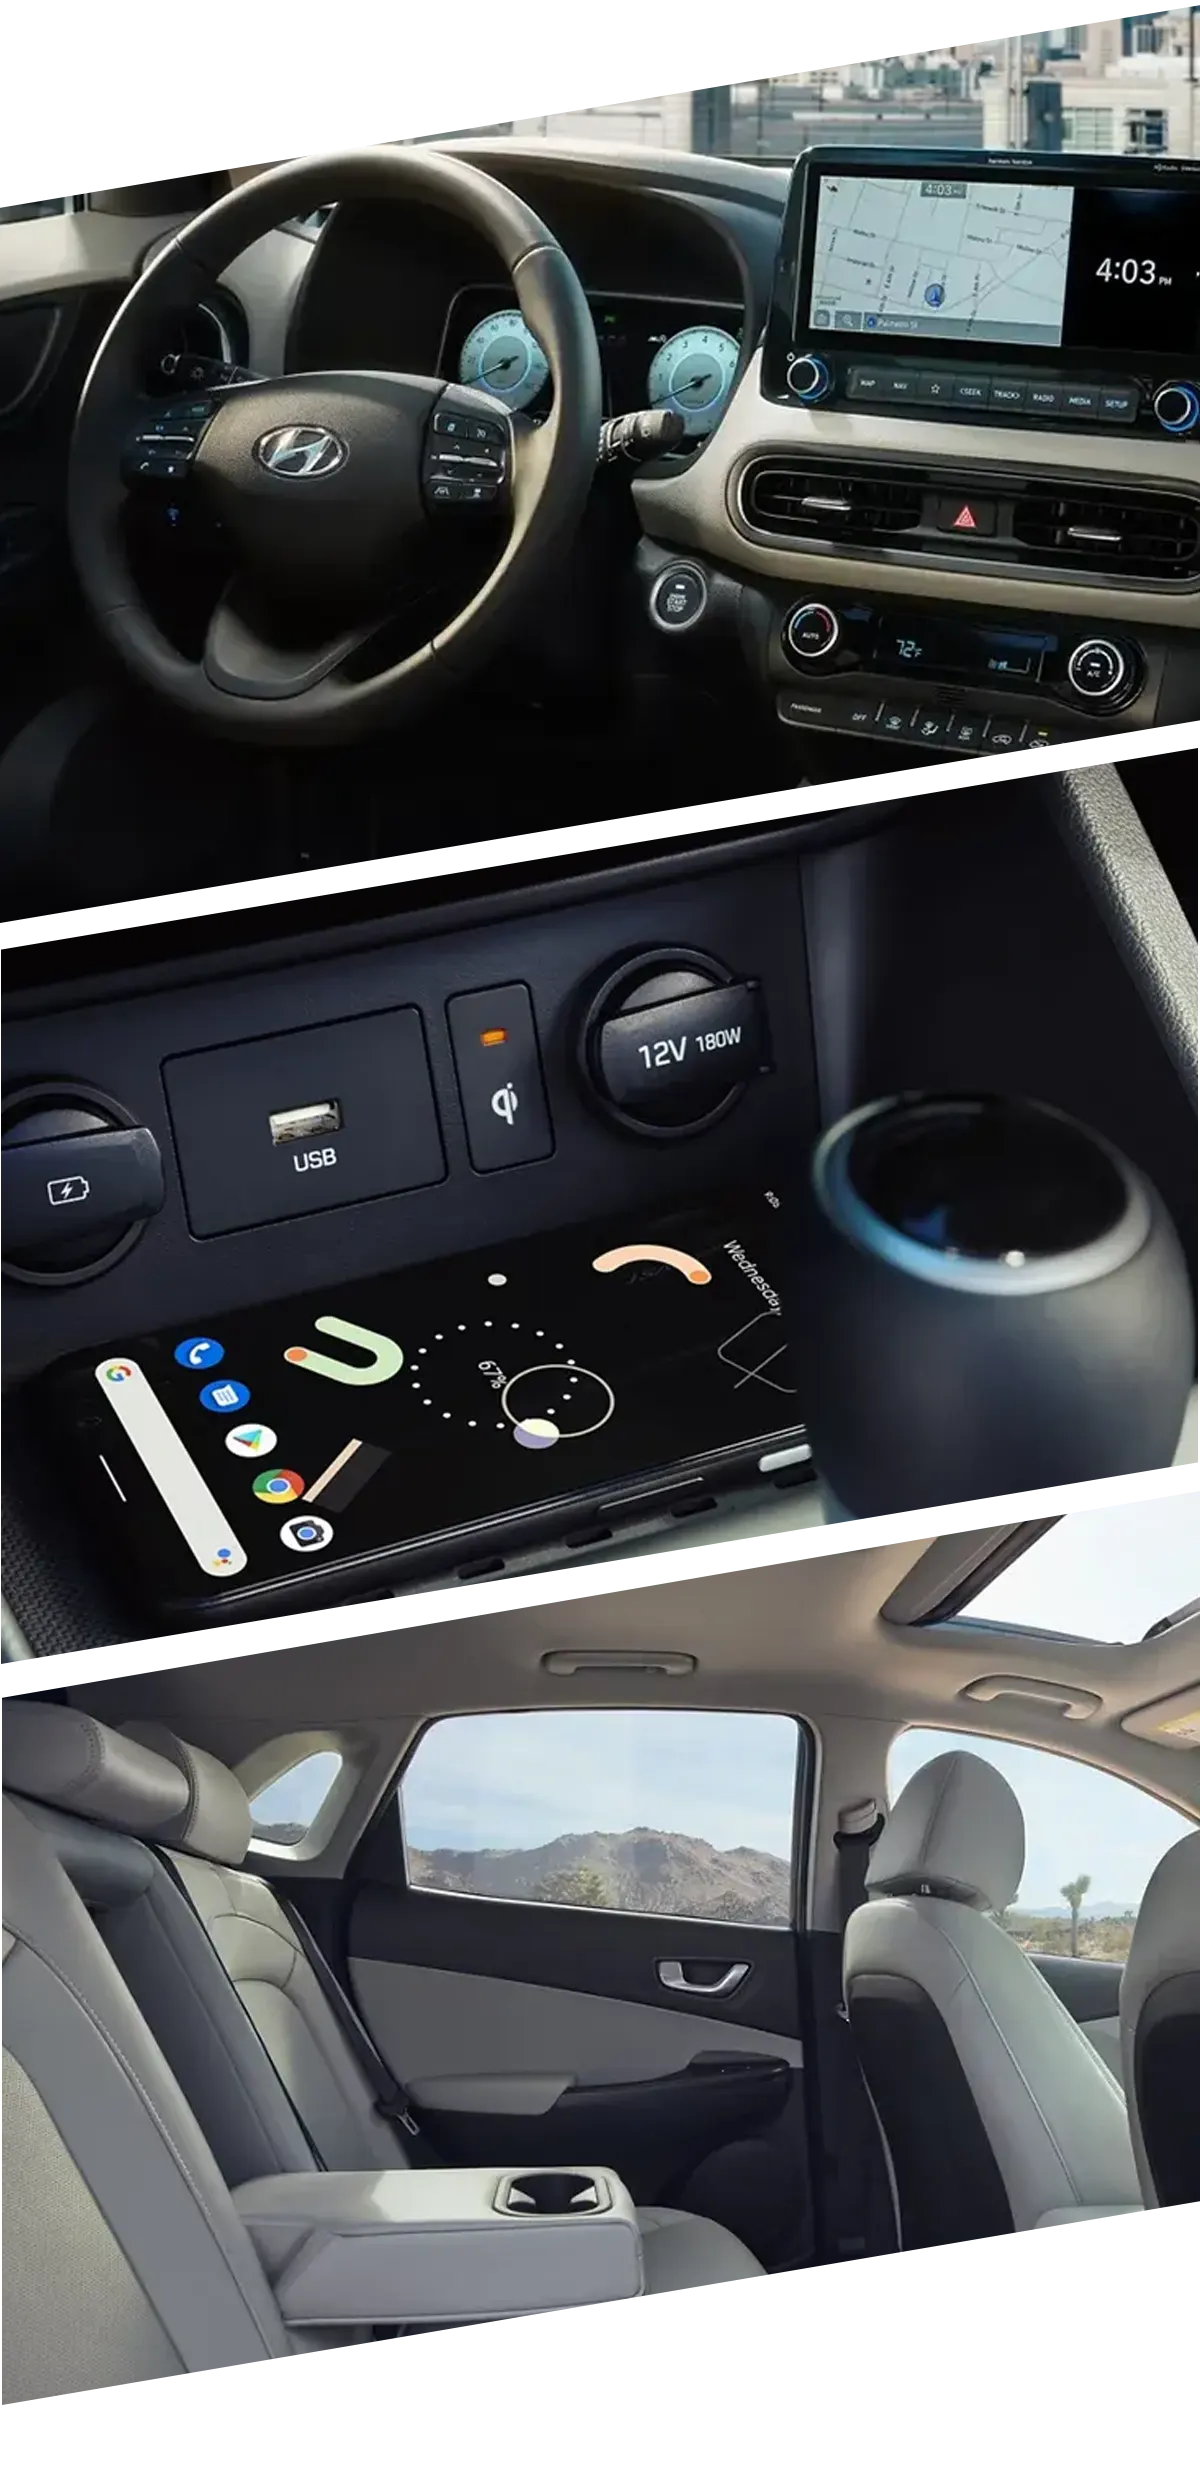 Brand New Hyundai Kona Interior Images